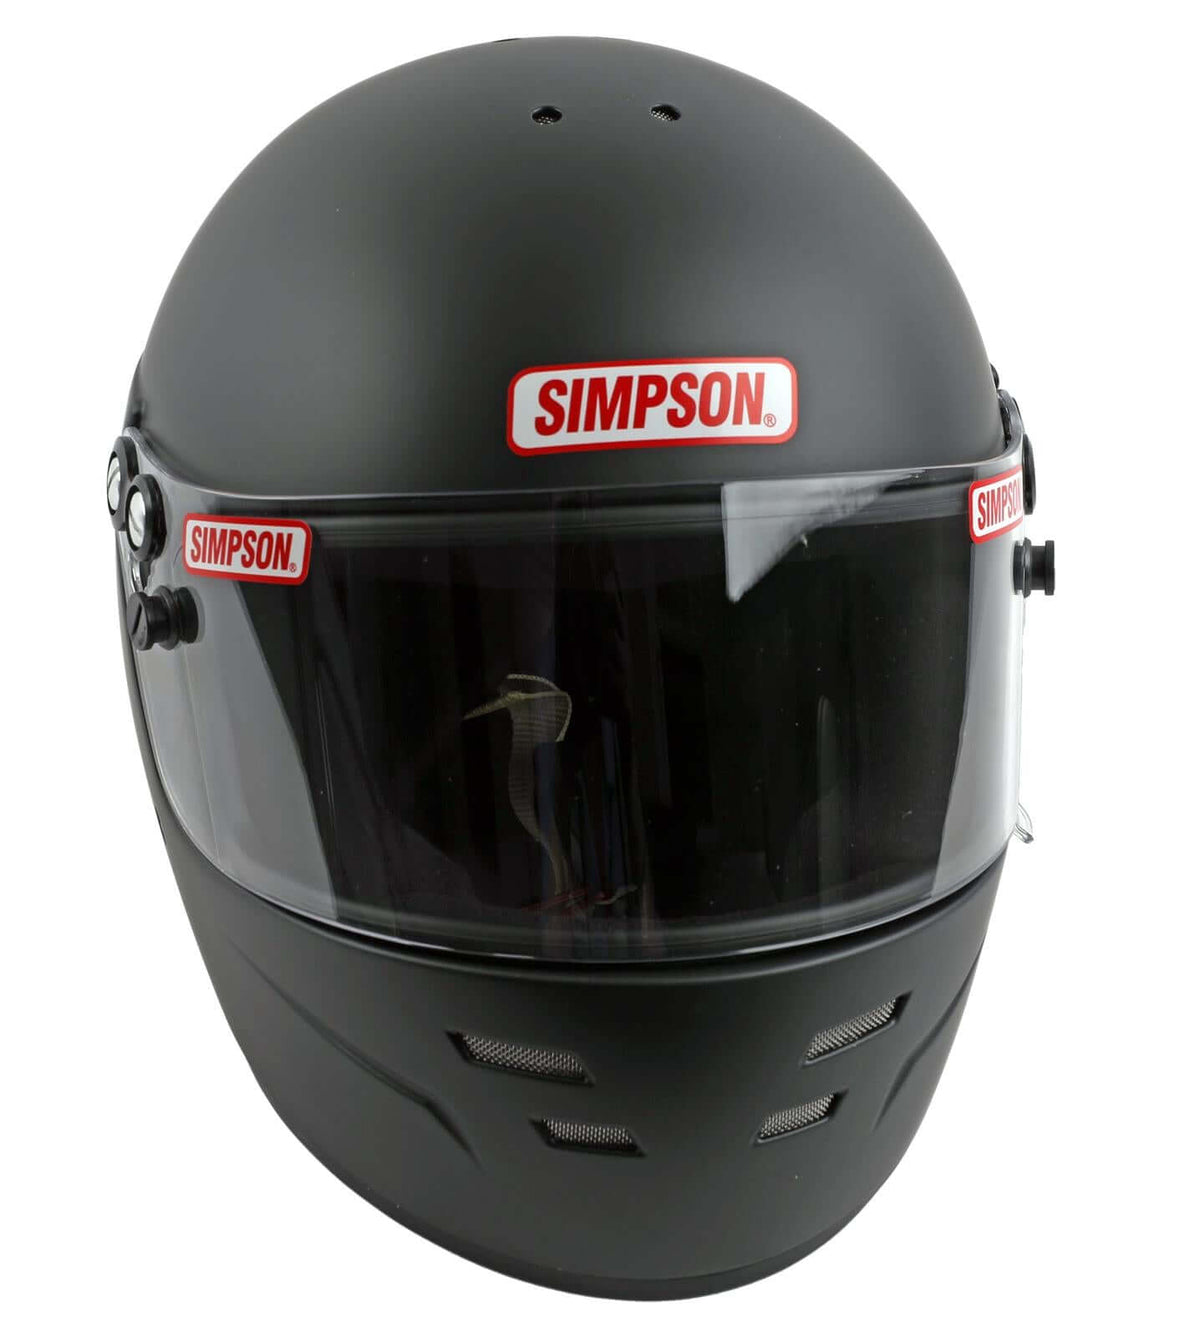 Viper Series Helmet - $401.95